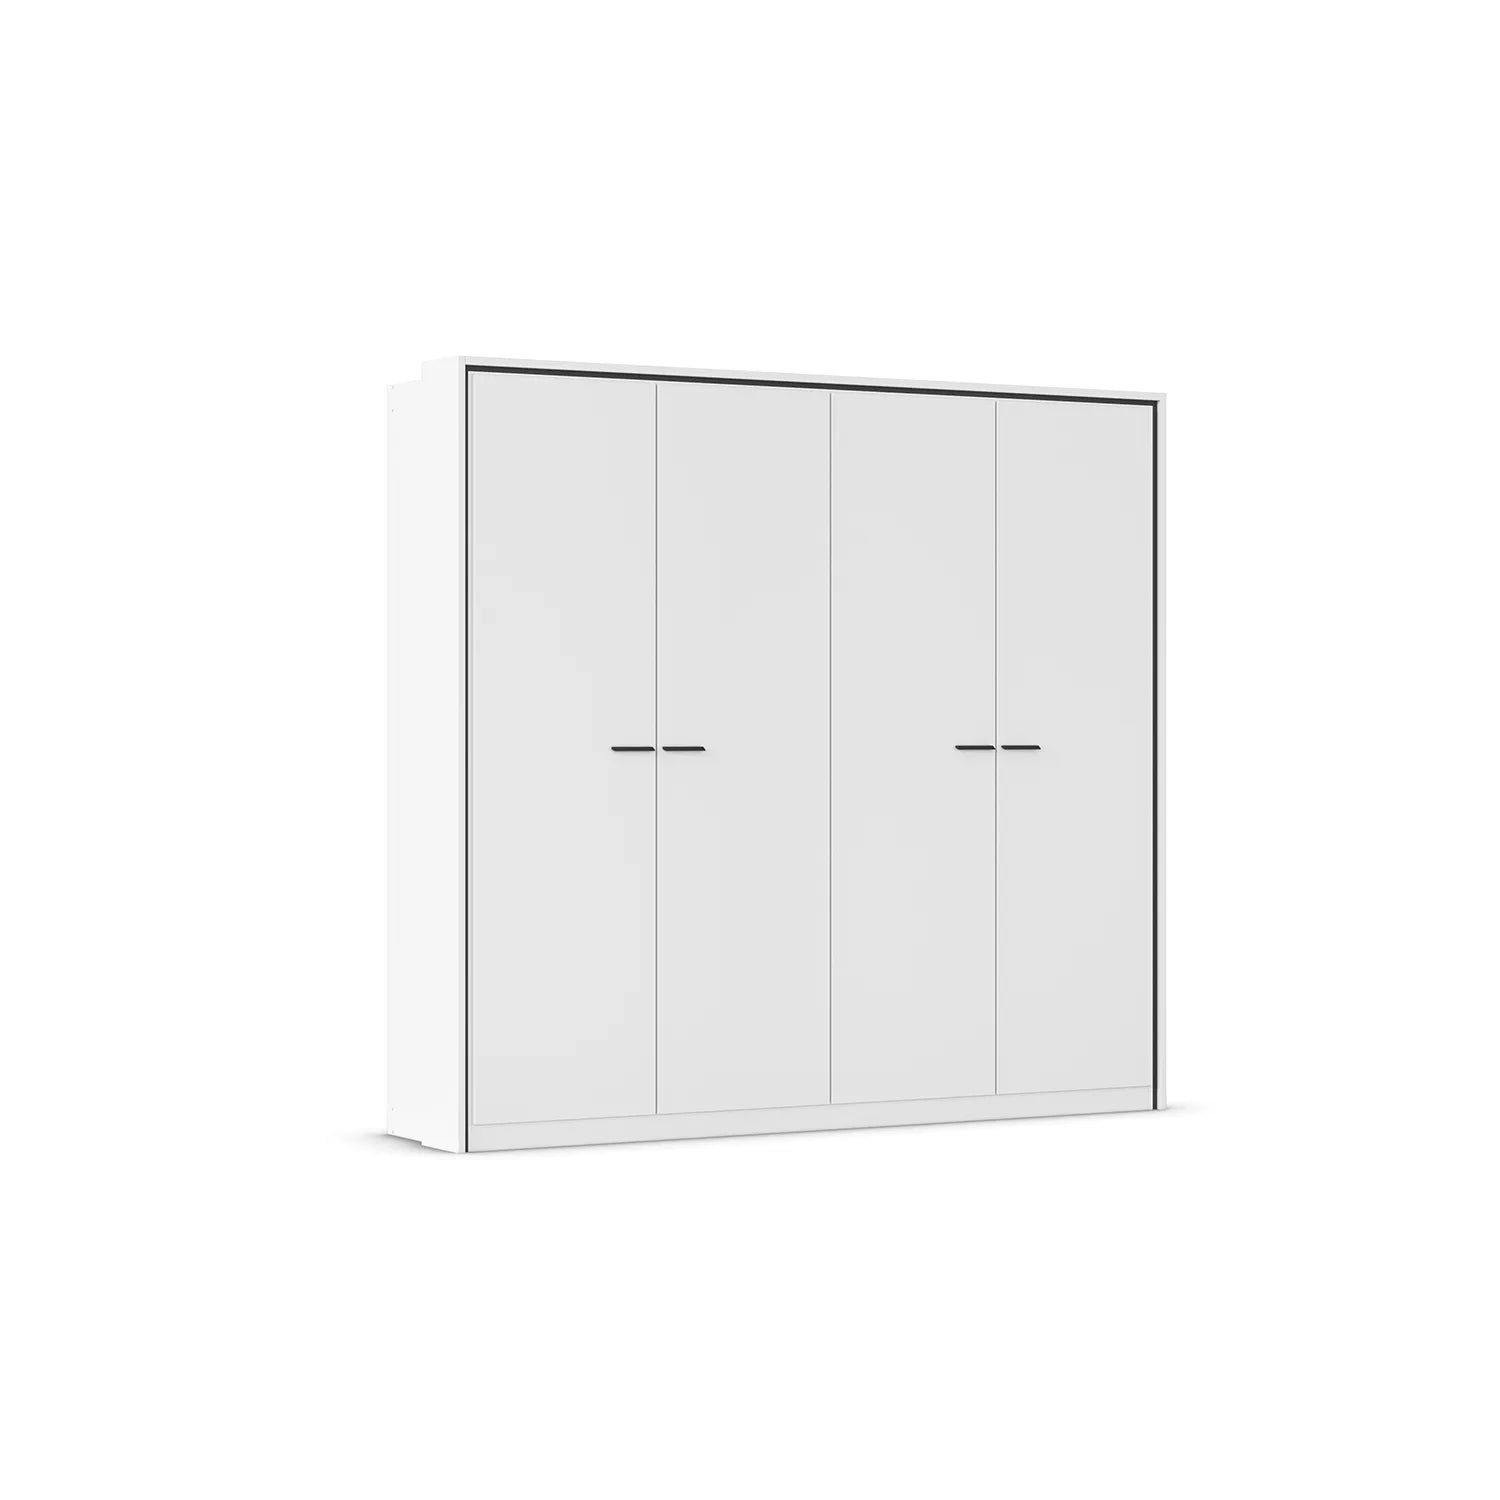 Zolo White 4 Door hinged Wardrobe - 230cm